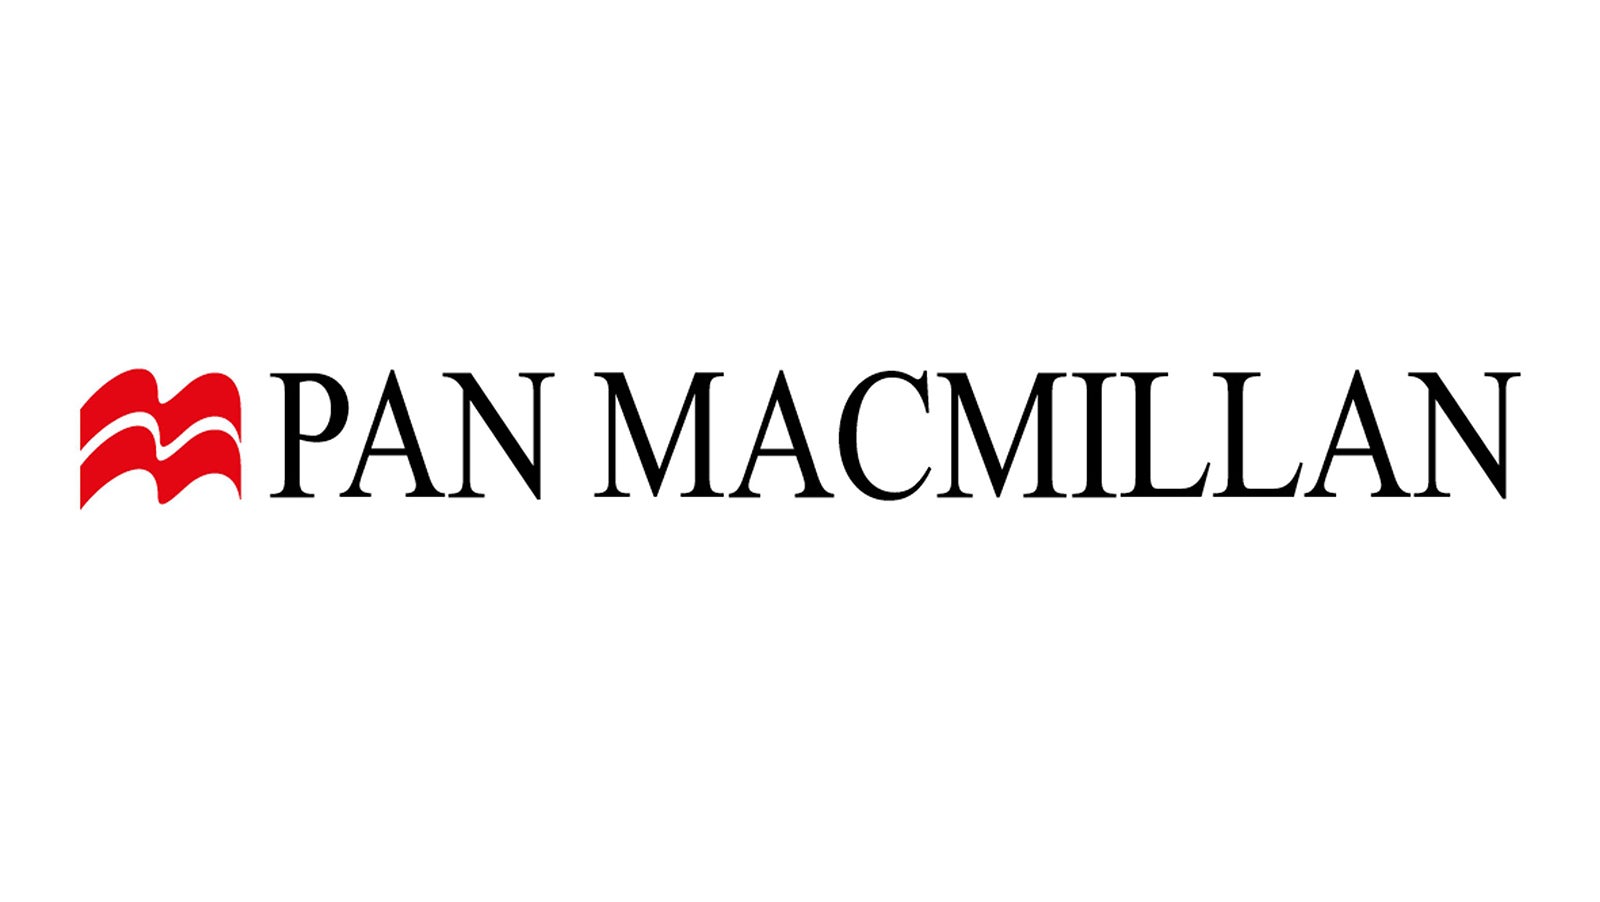 The Pan Macmillan logo on a white background